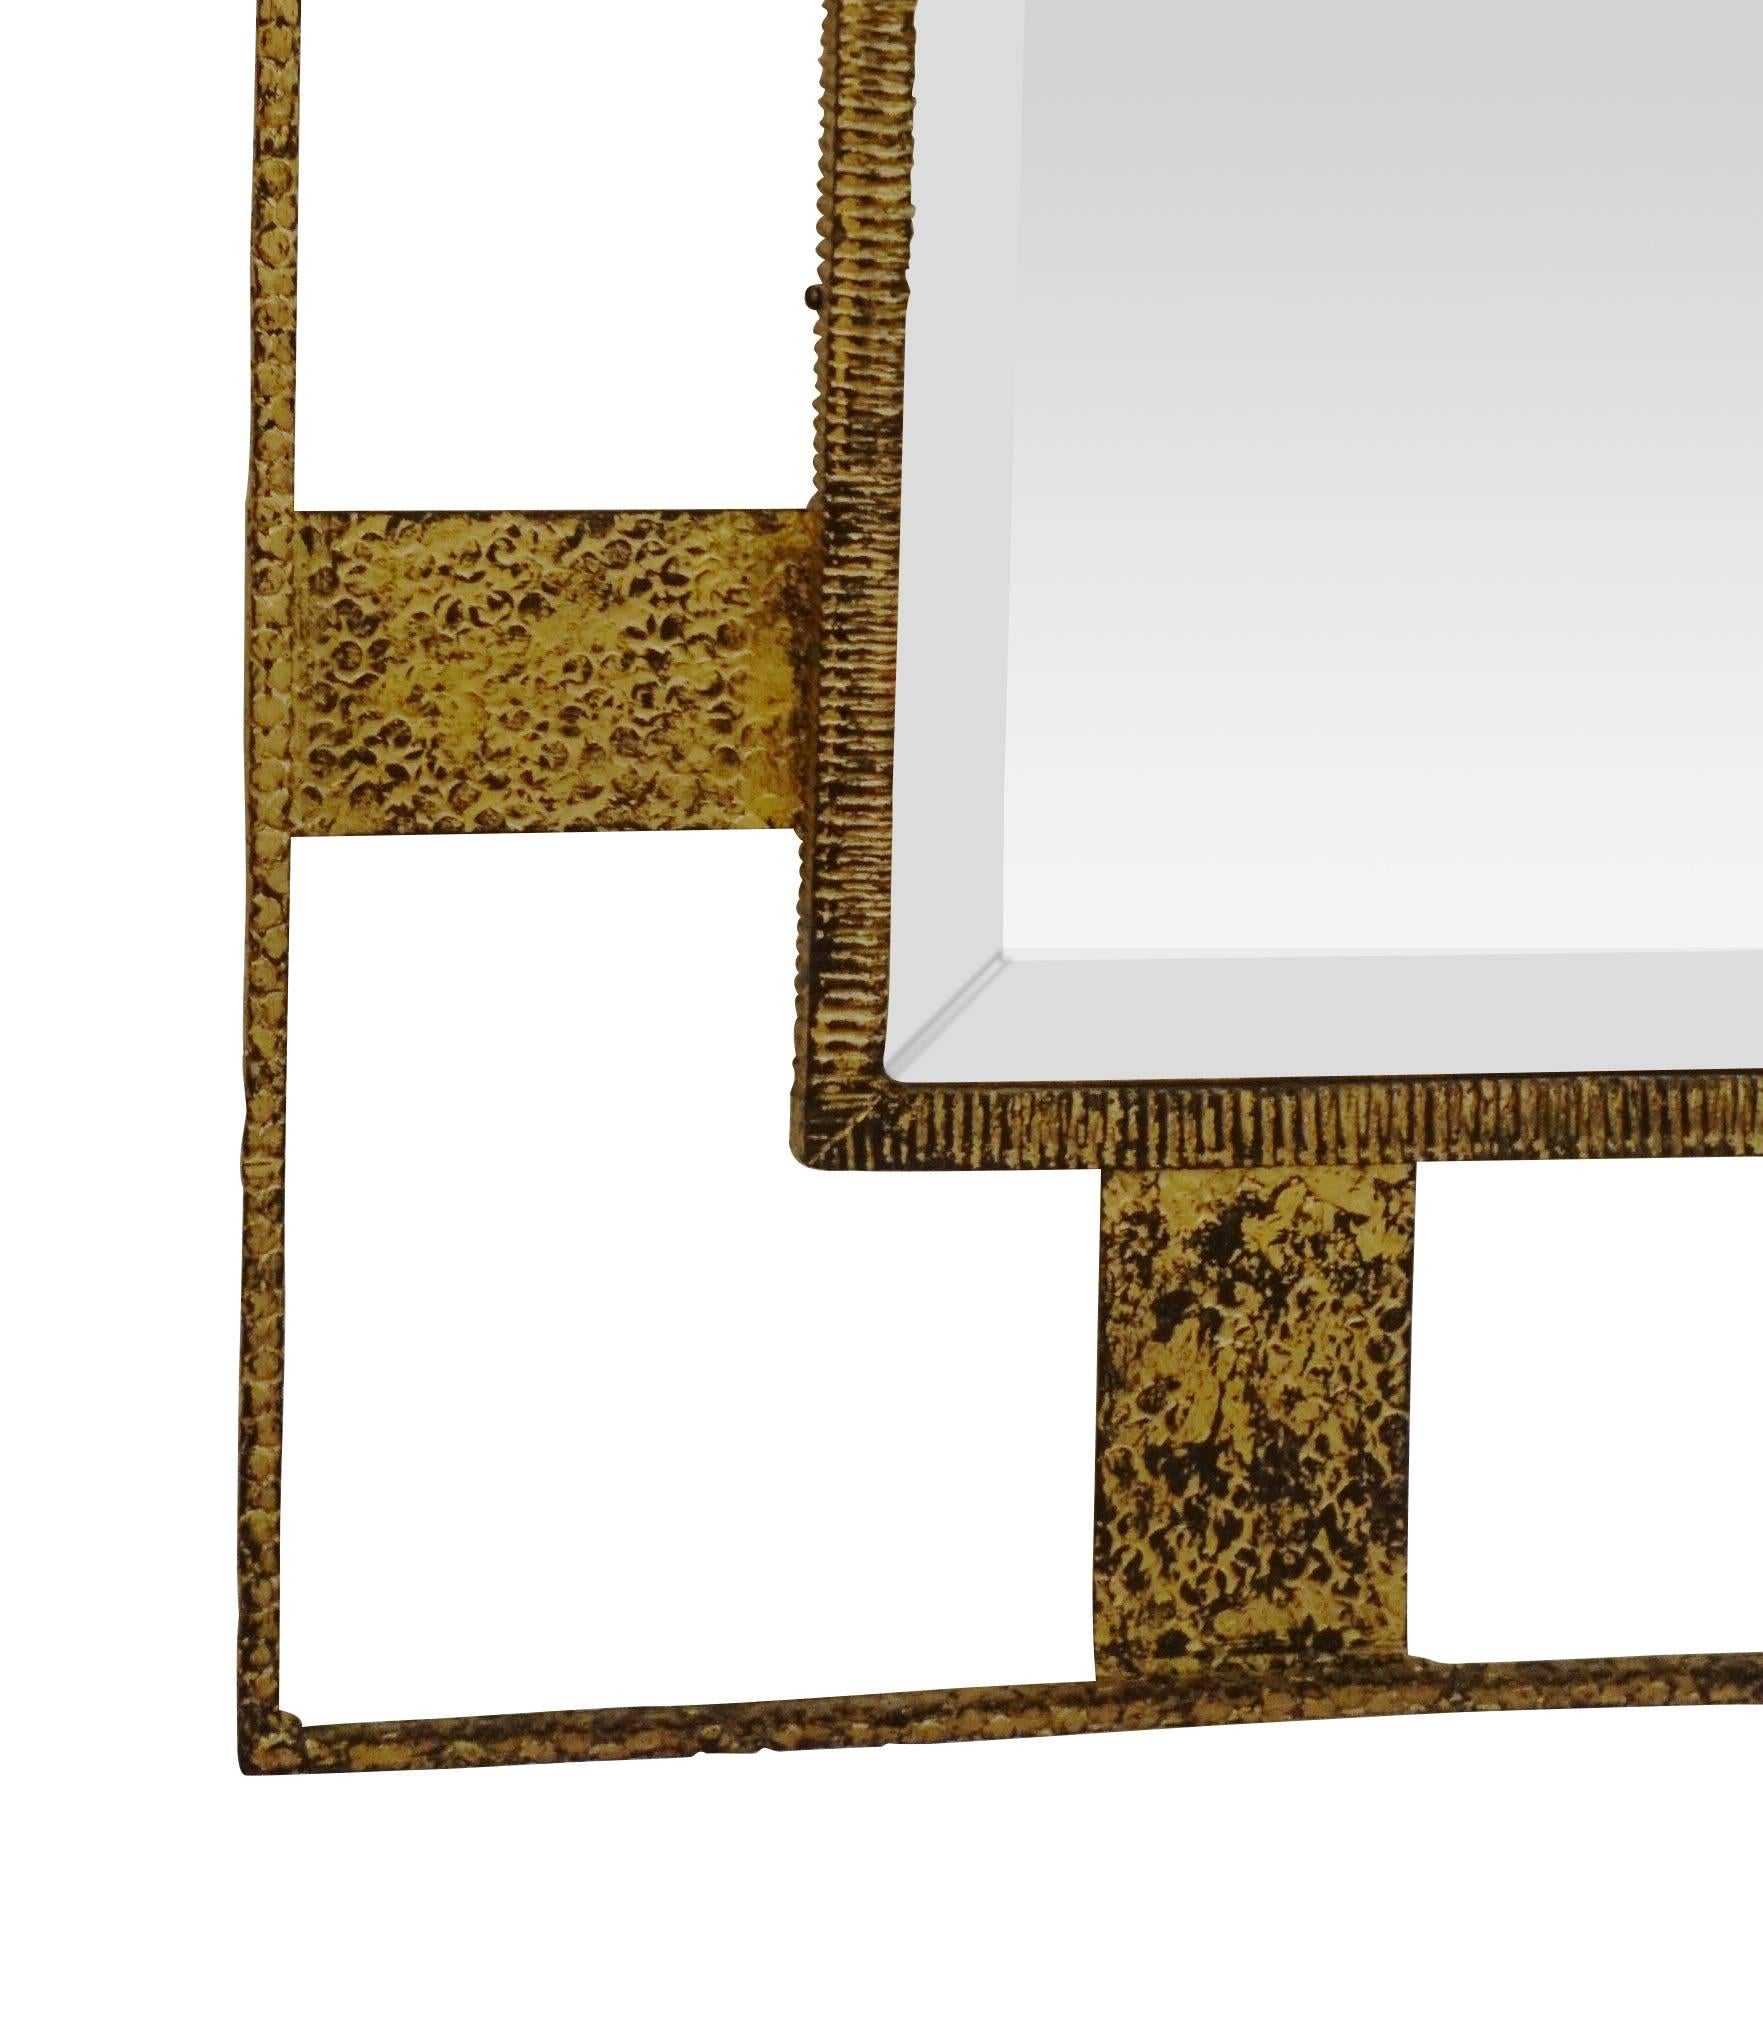 1930s French gold gilt iron framed mirror. 
Decorative blocks of gold gilt iron border the original mirror.